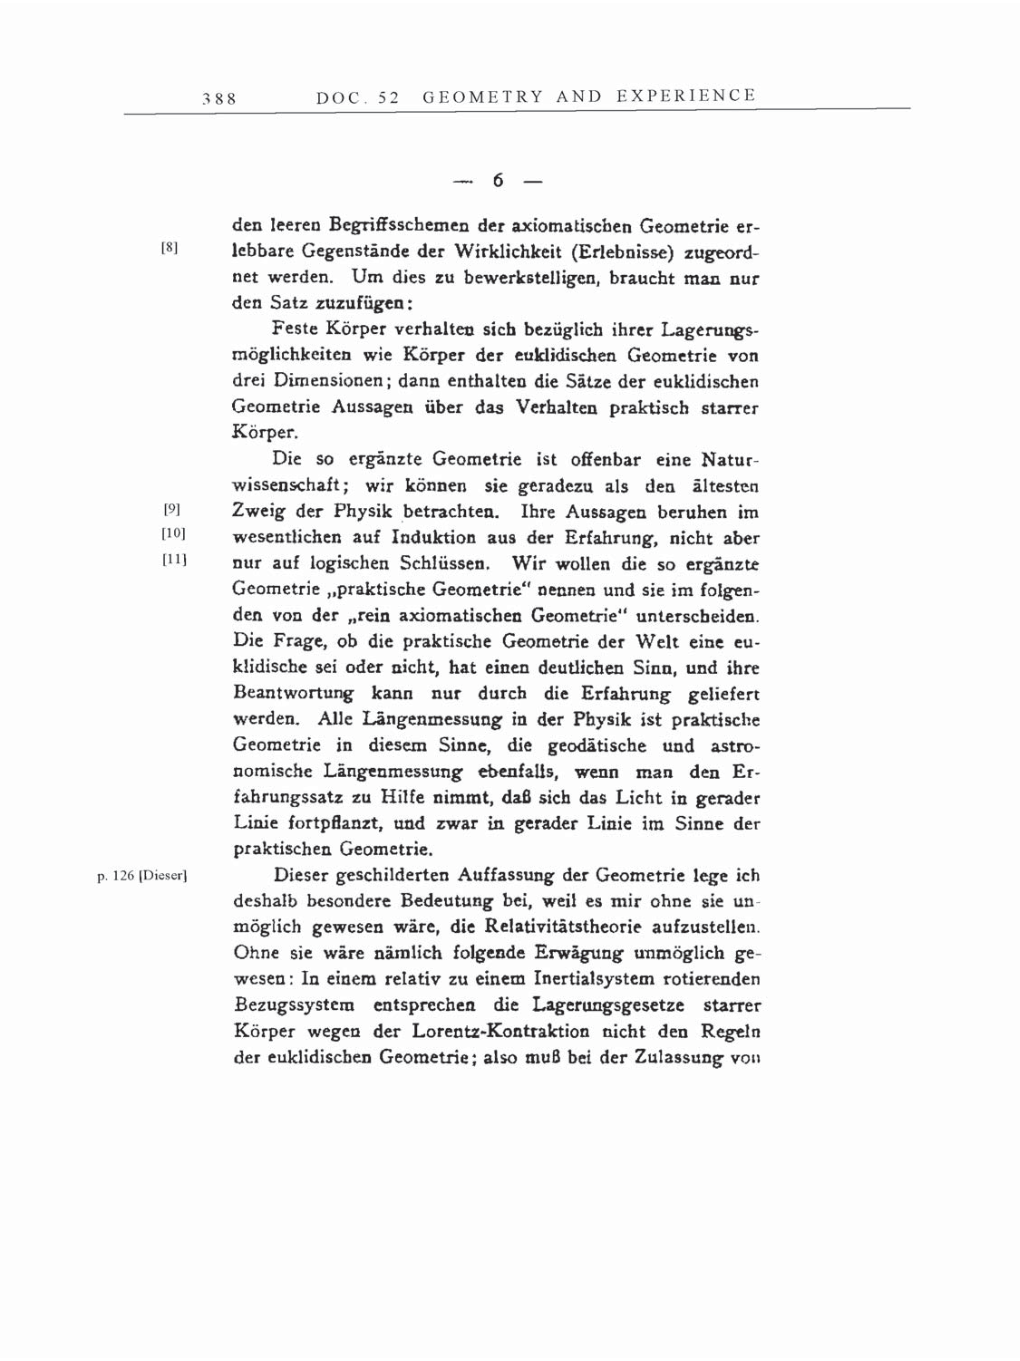 Volume 7: The Berlin Years: Writings, 1918-1921 page 388